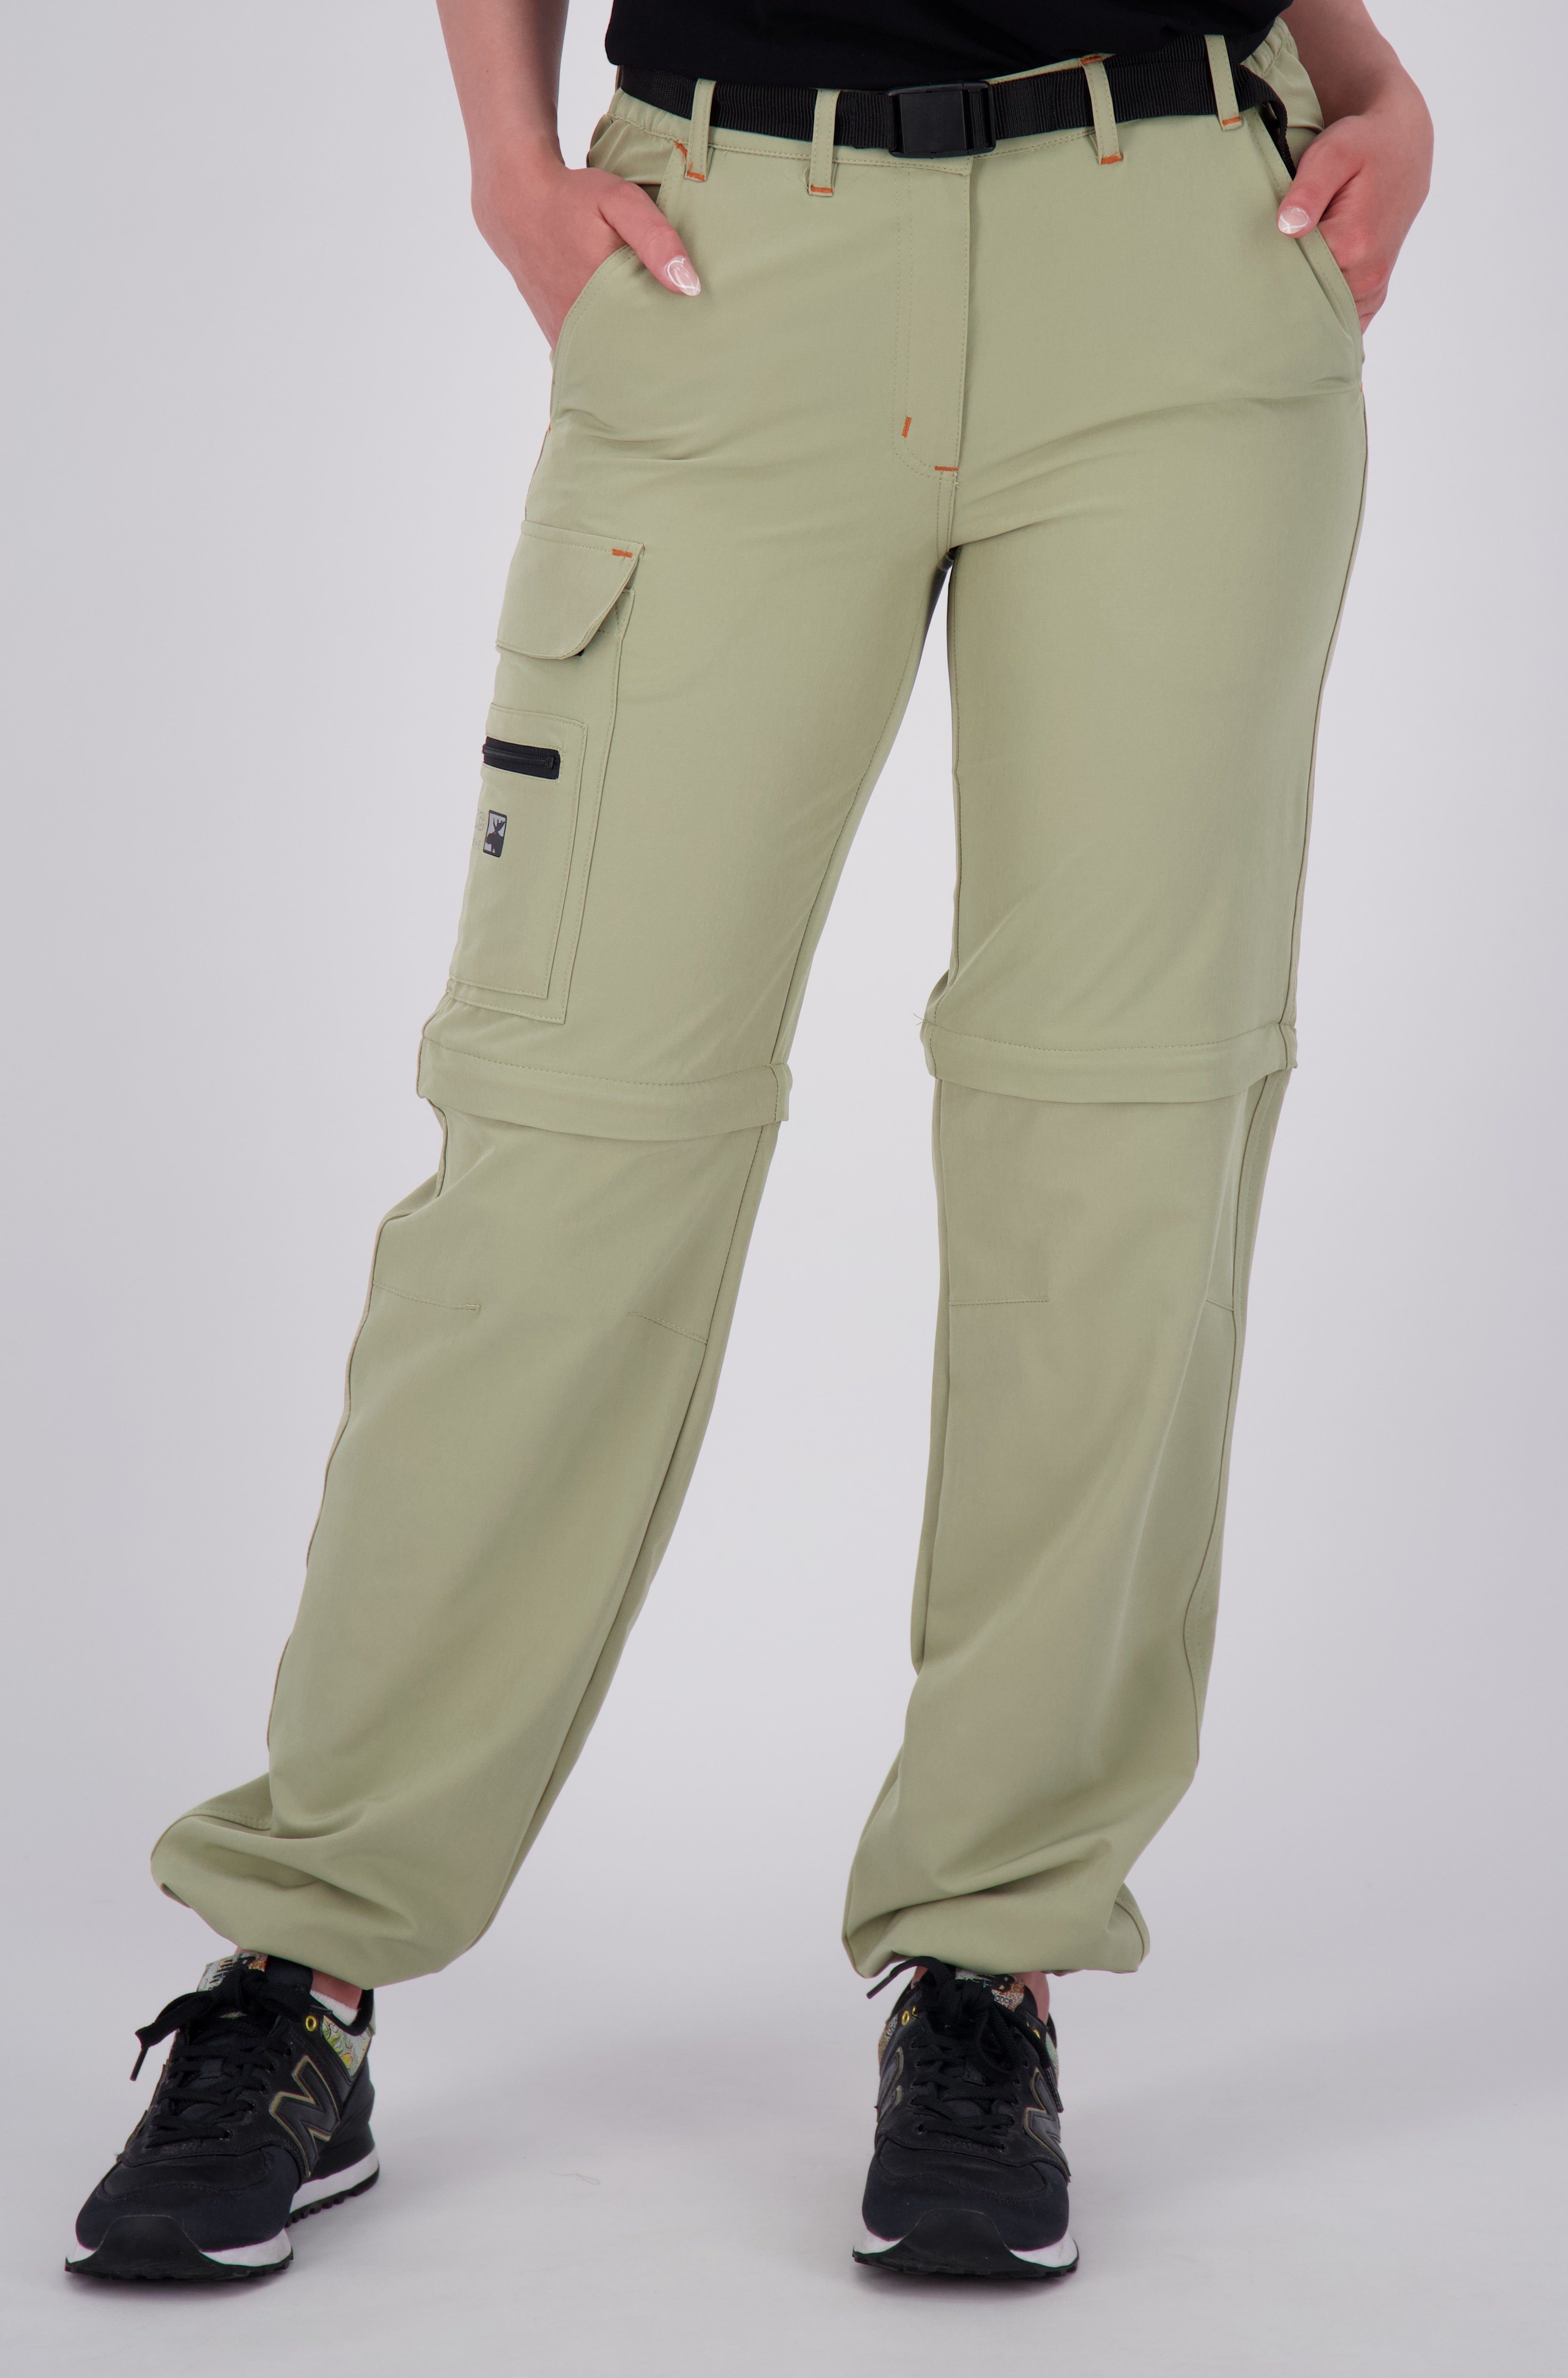 Deproc Kenora Wanderhose Trekking pantaloni donna doppio-zip 4 vie Stretch UVP 84,95 € 